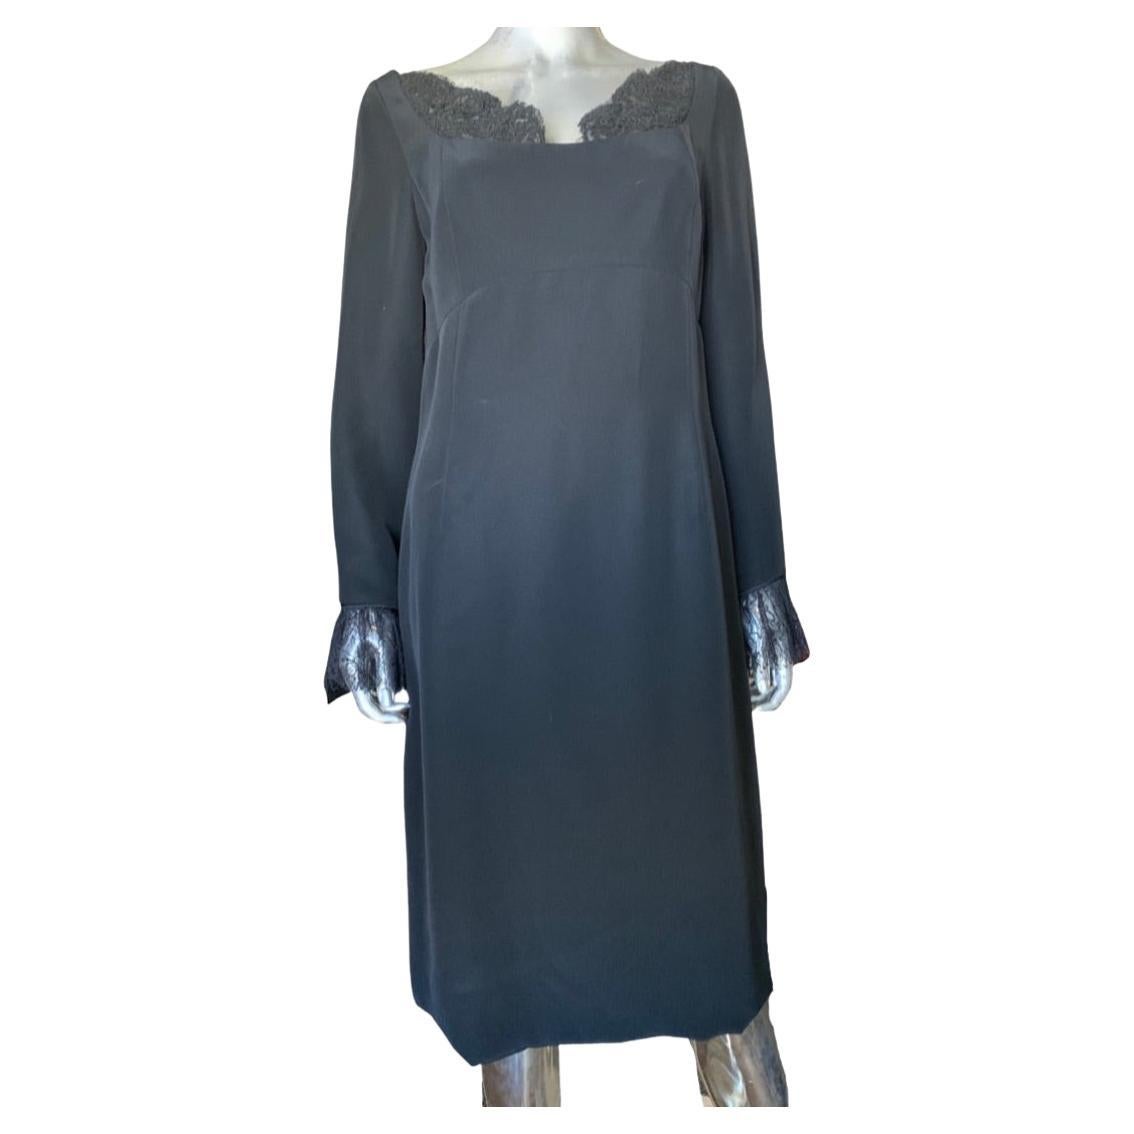 Joanna Mastroianni Black Sheath Dress w/Lace Trim Size 14